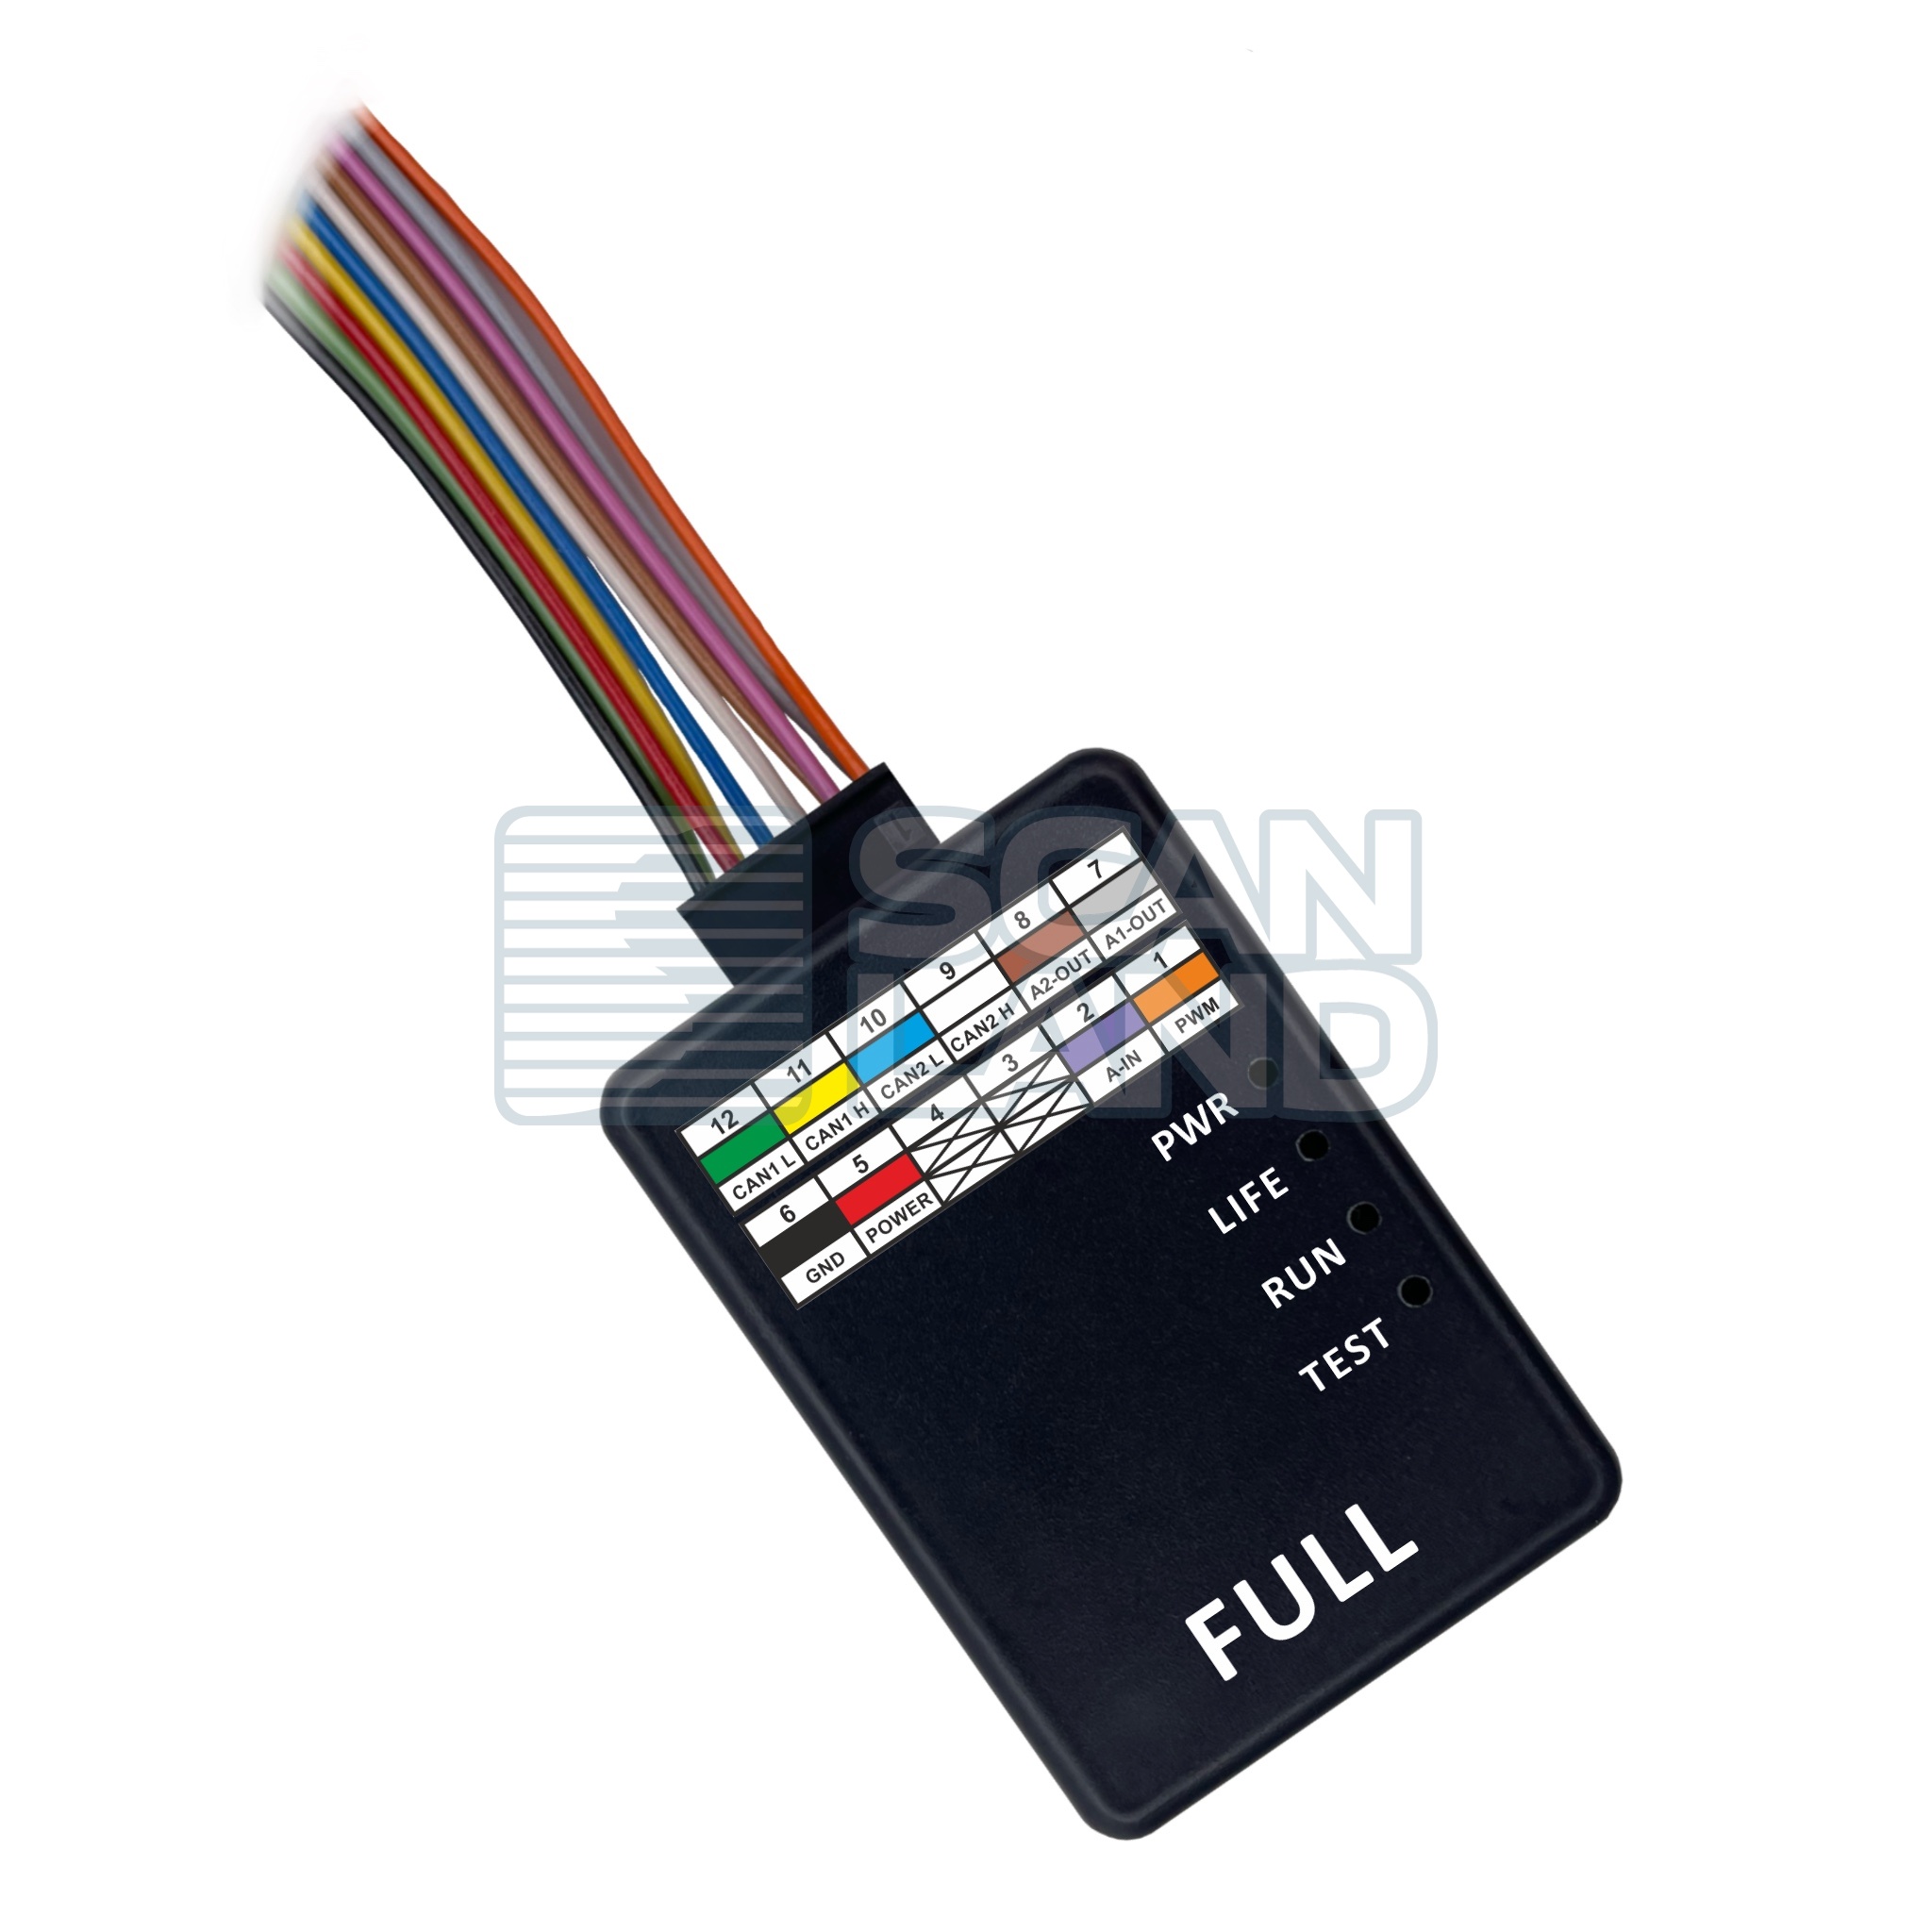  AdBlue Emu-Max Full v.20.11  Daf XF106    eas-4, 6, 